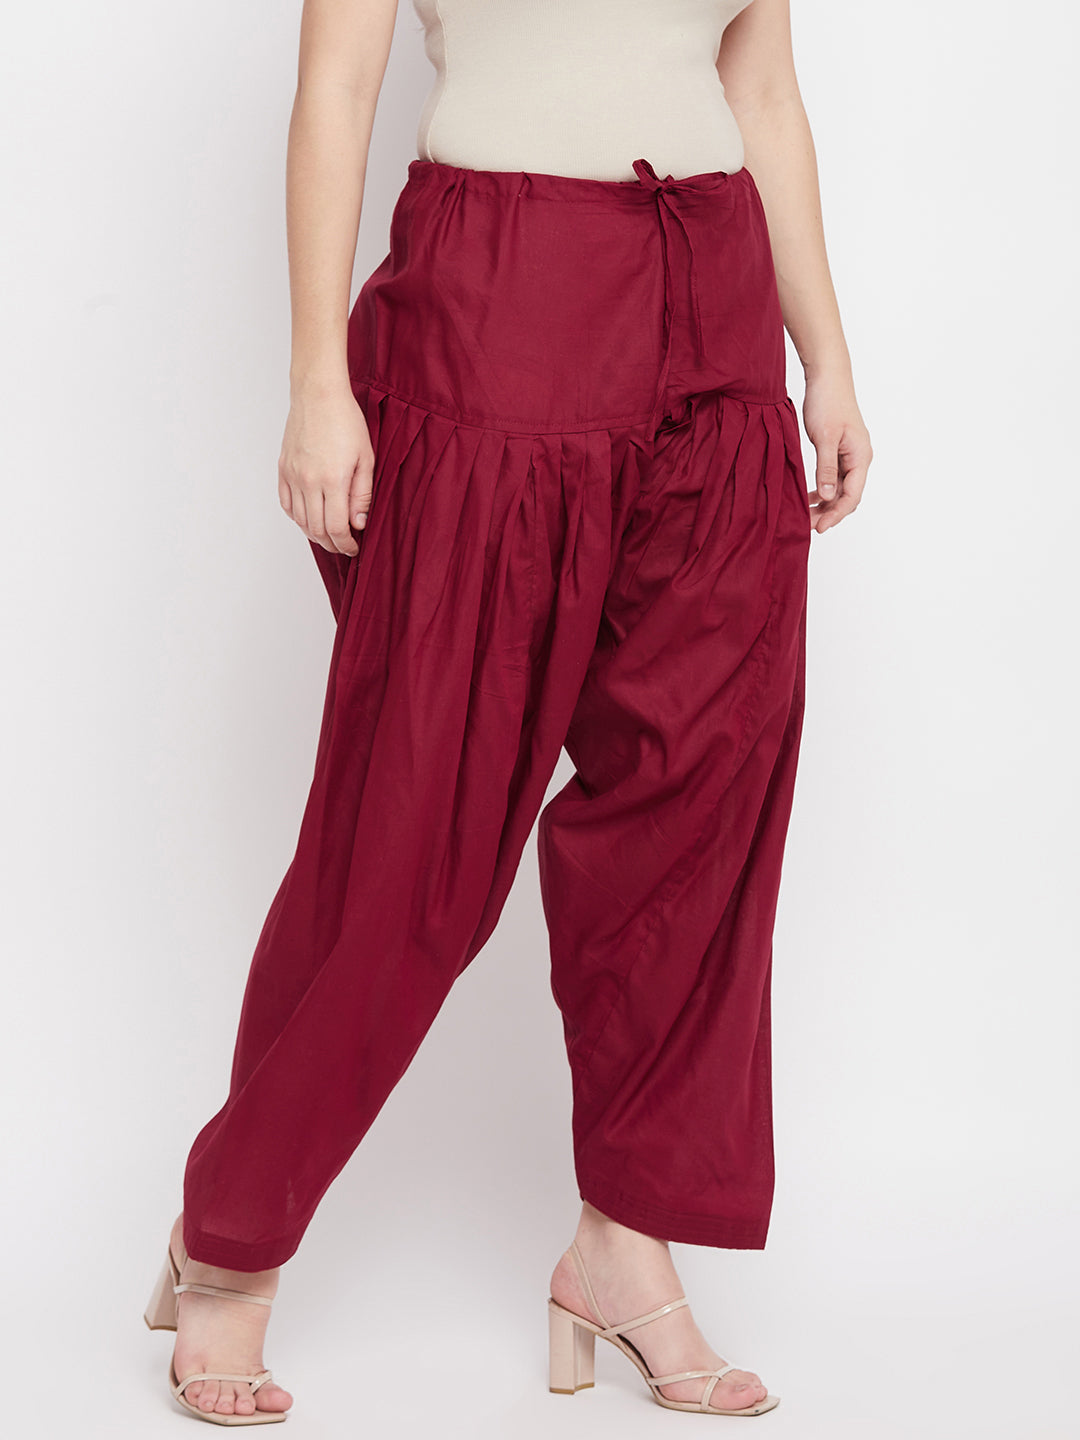 Indian Ethnic Wear Online Store | Fashion pants, Cotton dresses, Pink cotton